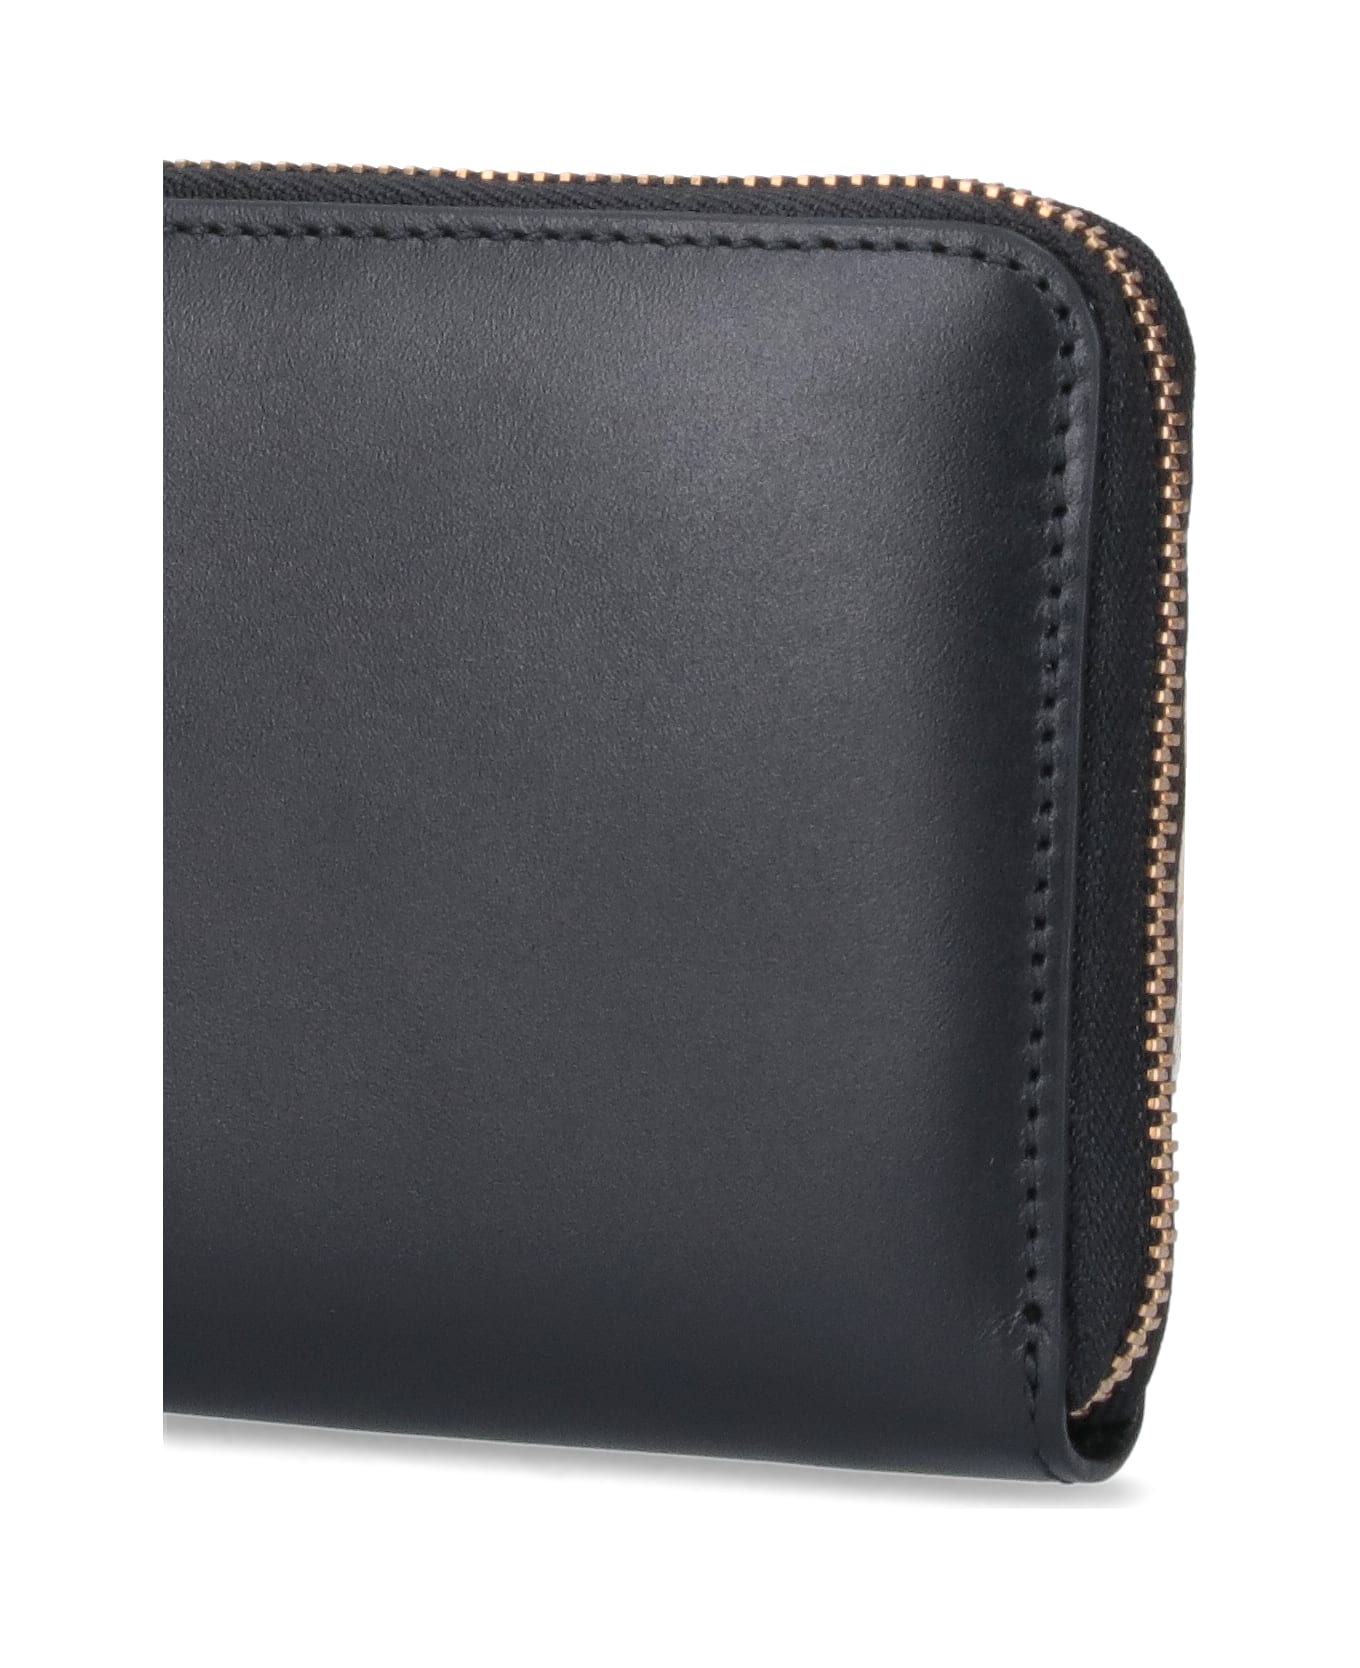 Comme des Garçons Wallet 'classic' Zip Wallet - Black